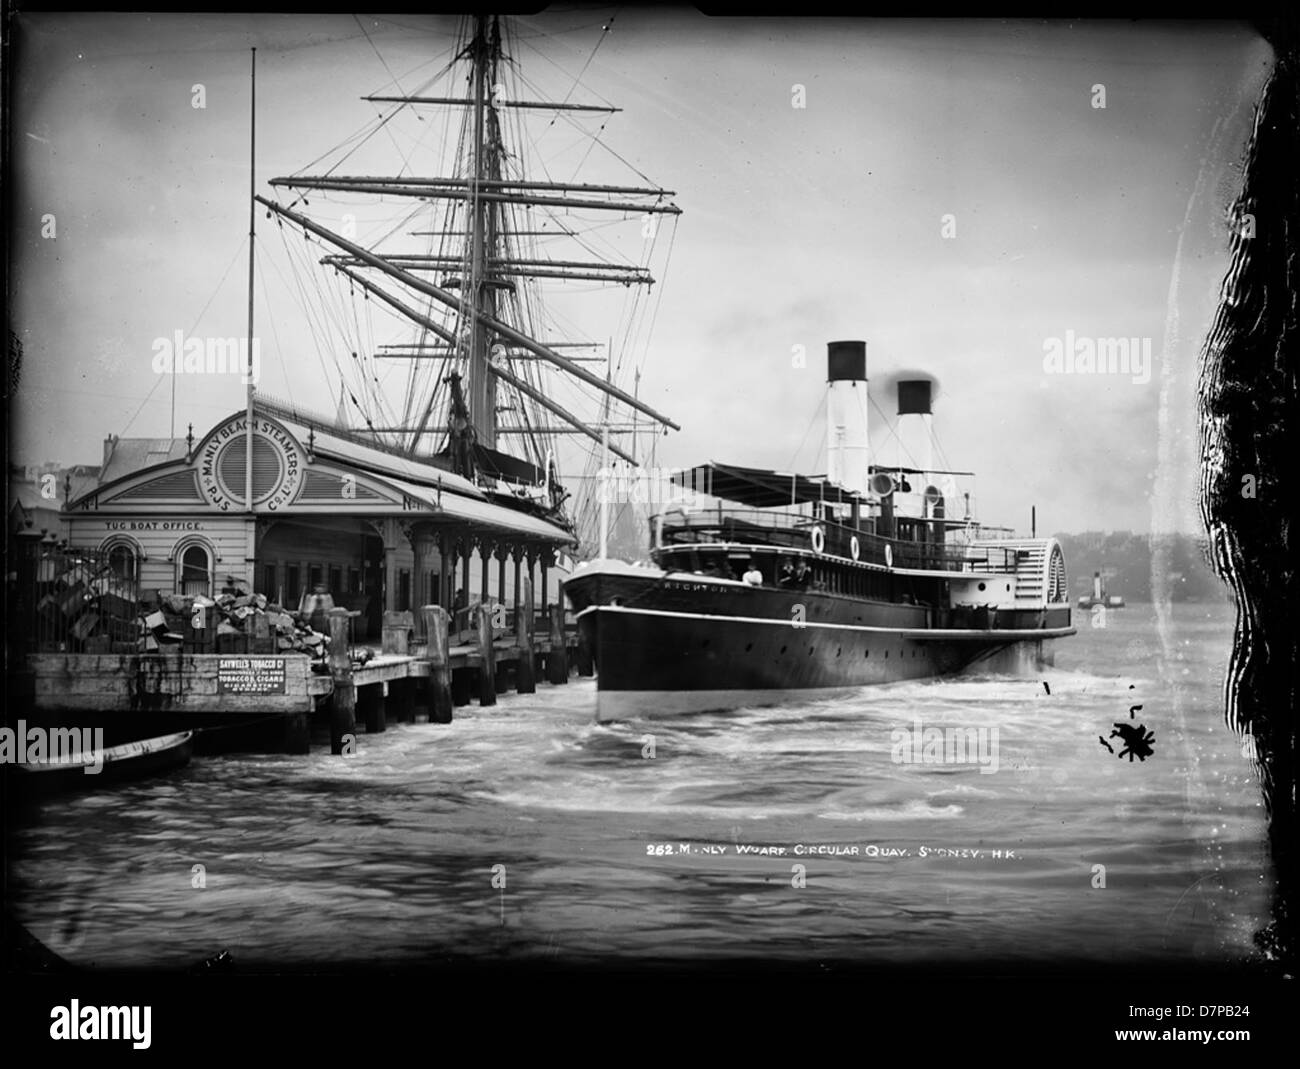 Manly Wharf, Circular Quay, Sydney Stockfoto